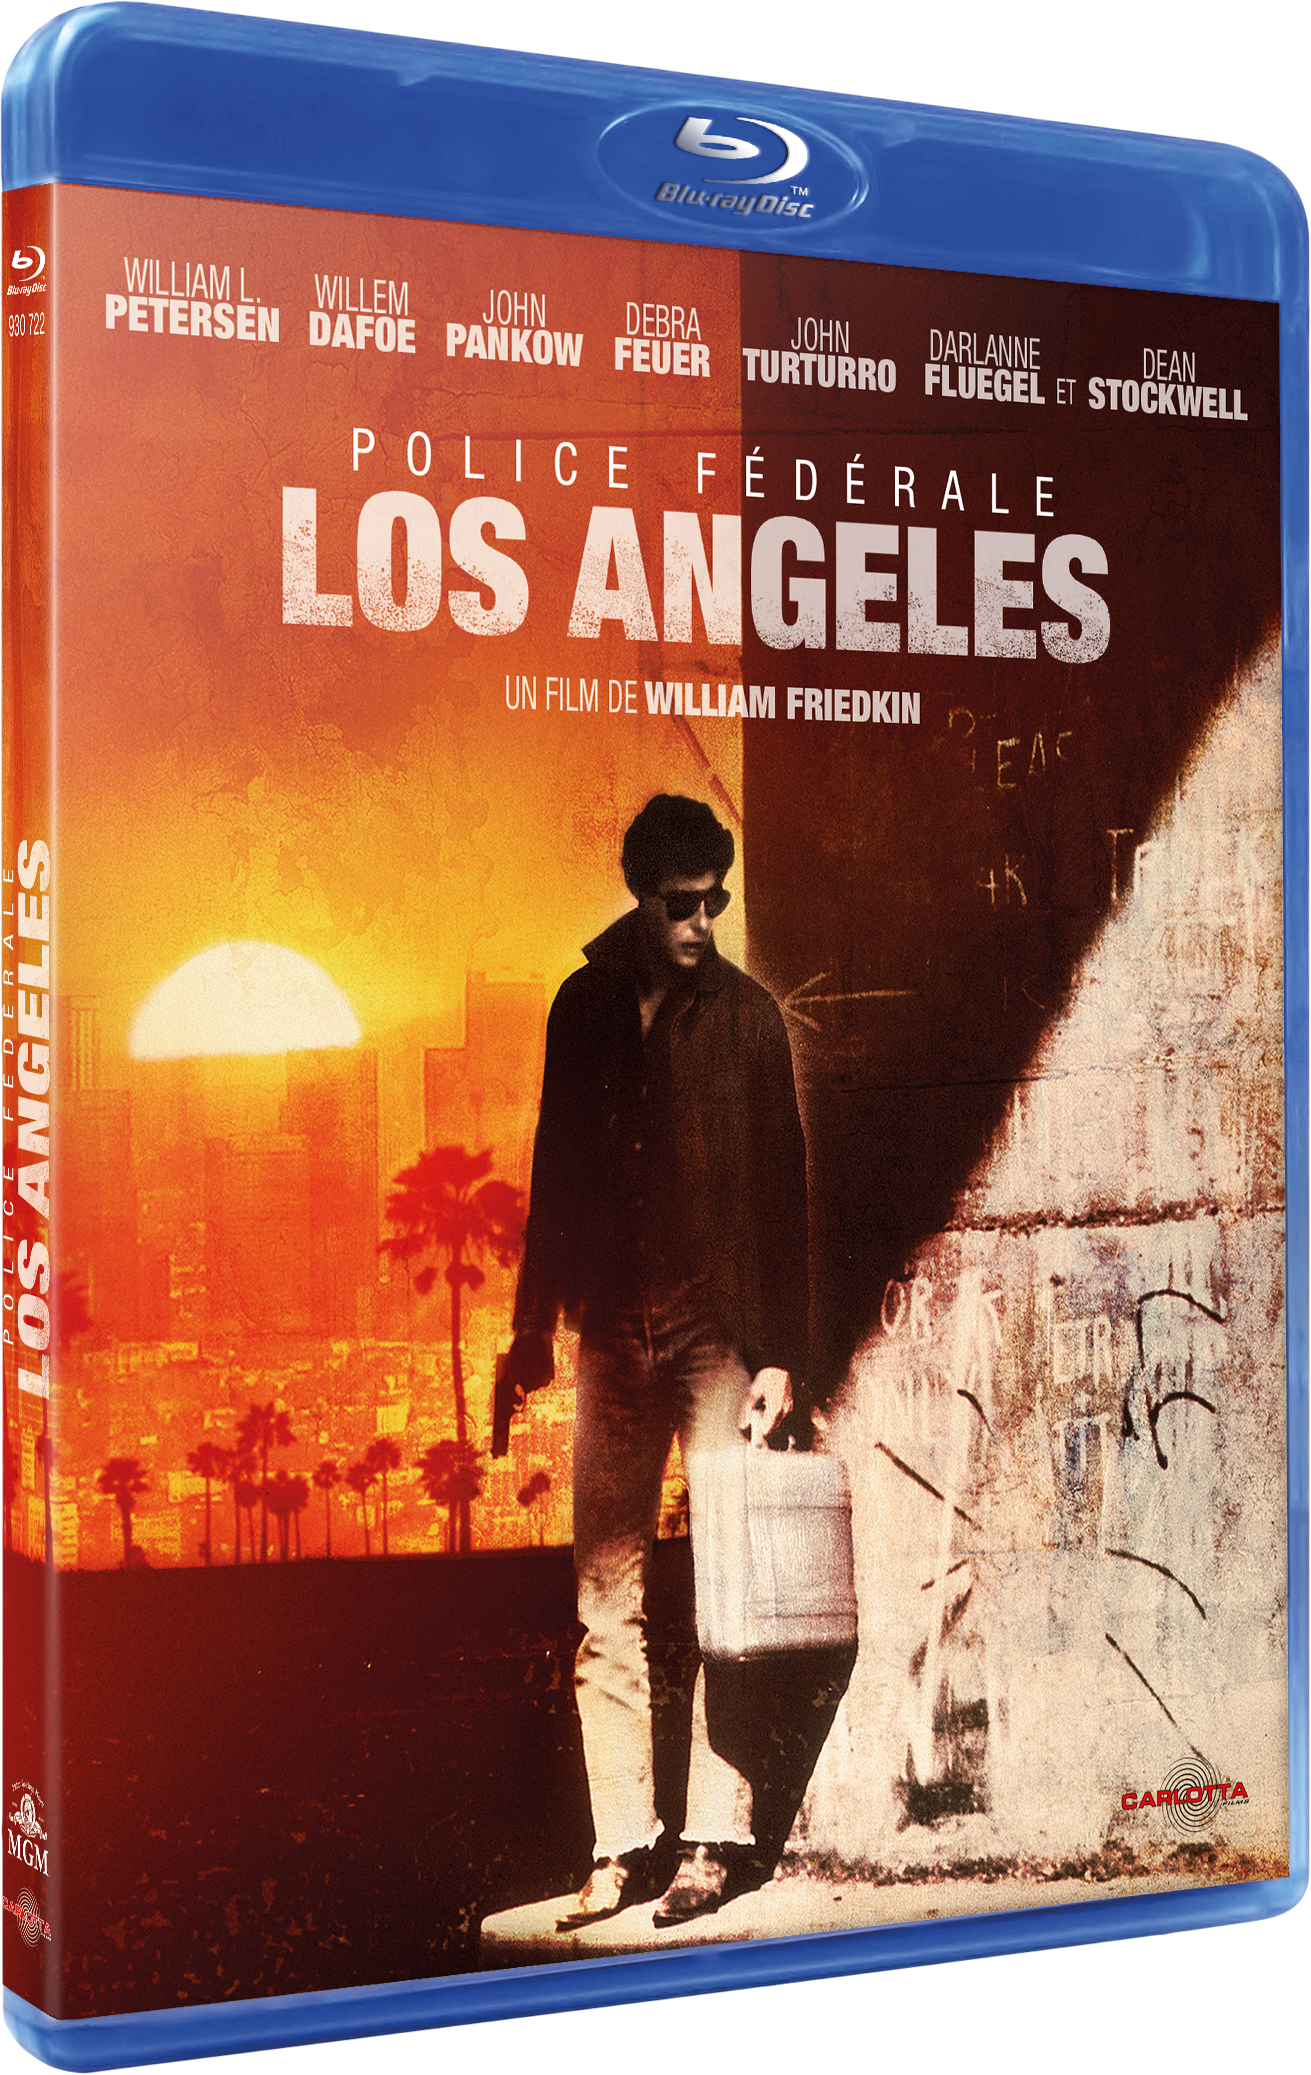 Police fédérale, Los Angeles - Blu-ray - Carlotta Films - La Boutique